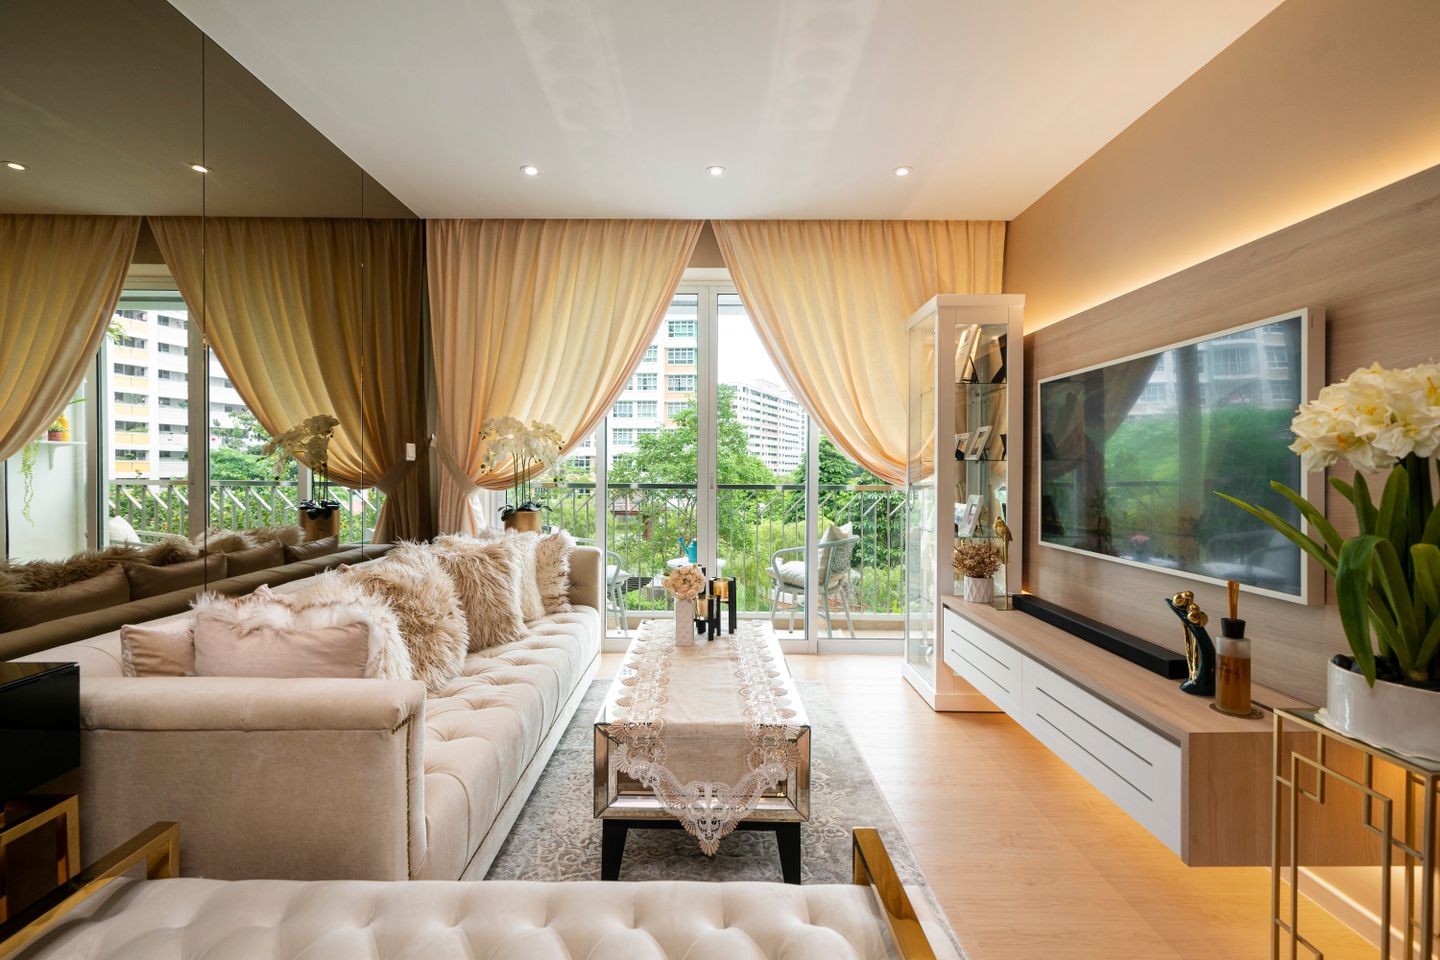 Contemporary Luxury Interior Design For Bedrooms - Livspace